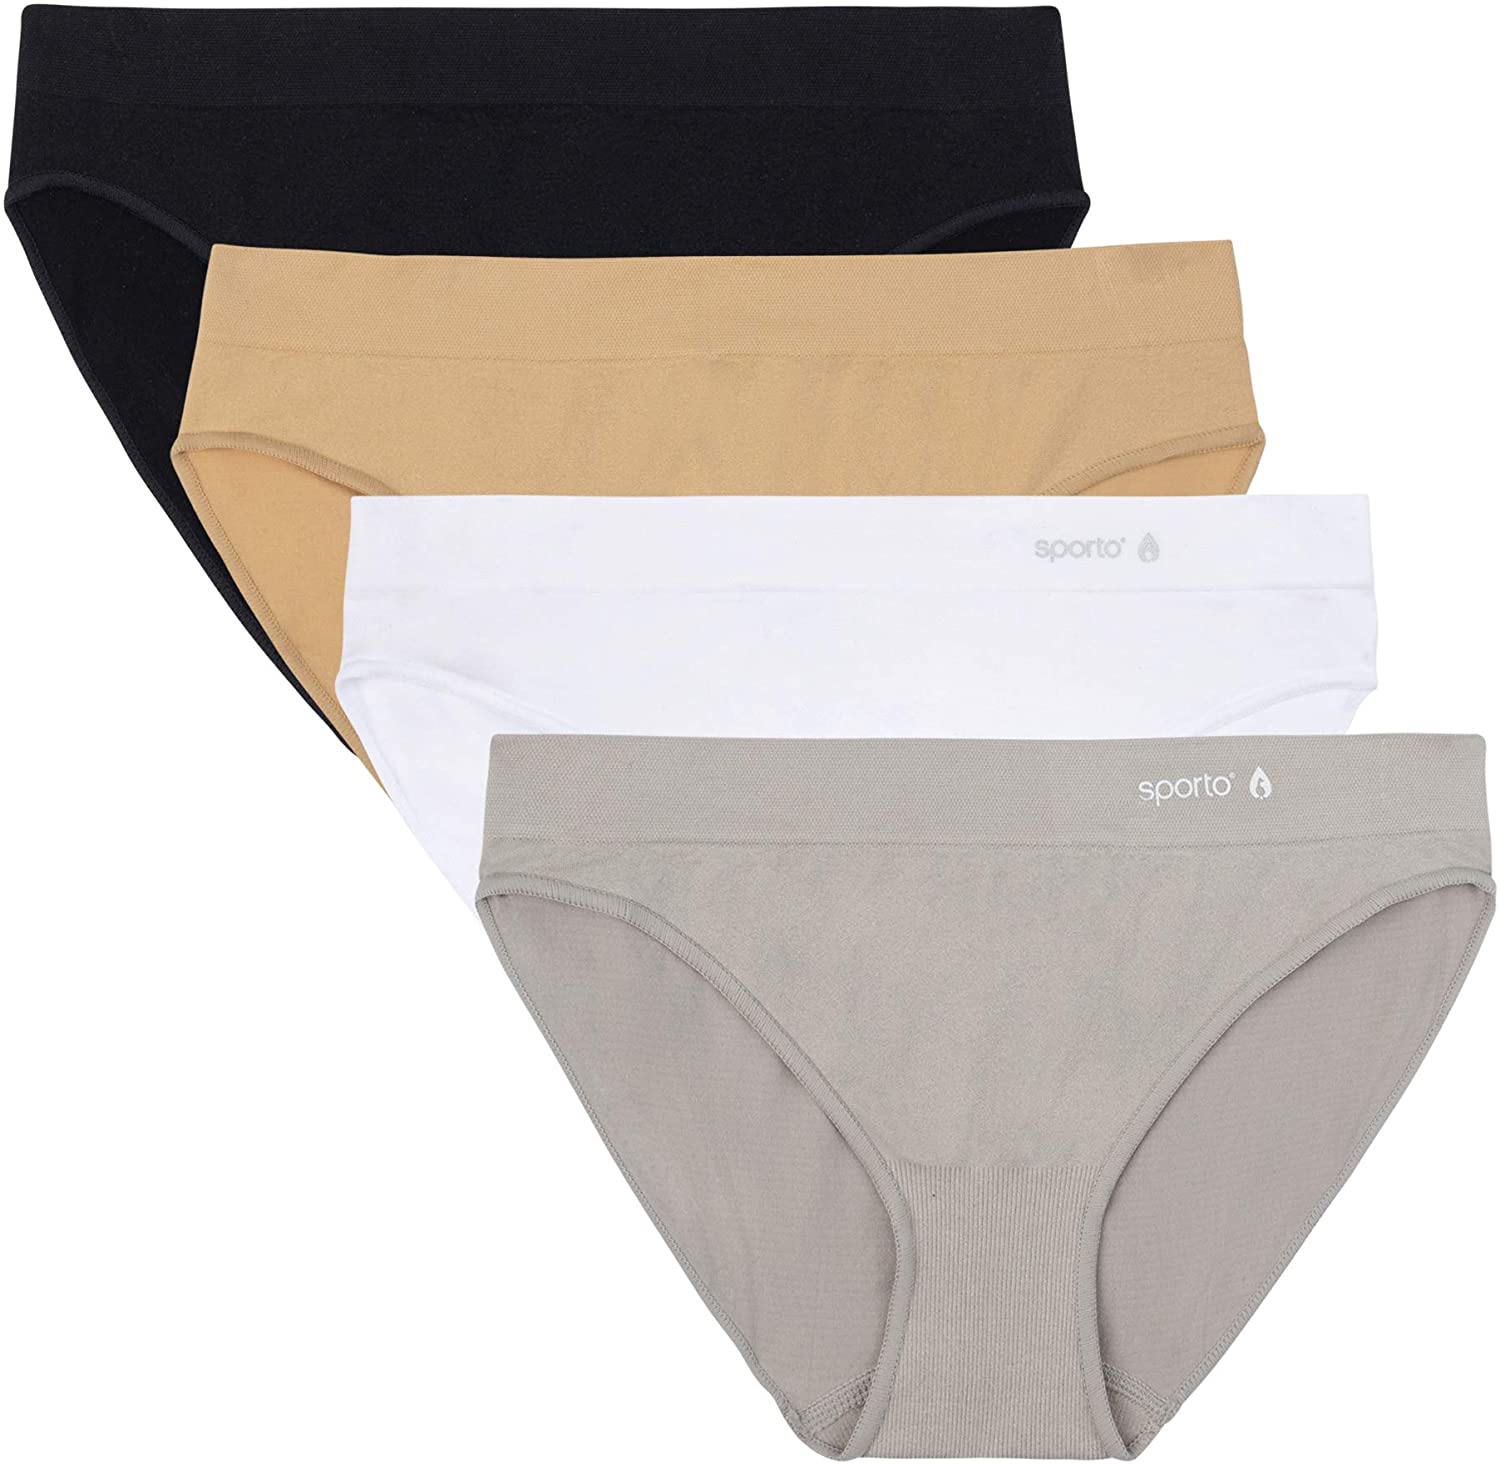 Price:$15.99 sporto Womens Seamless Panty Bikini Underwear Pack of 4 at Amazon Women’s Clothing store